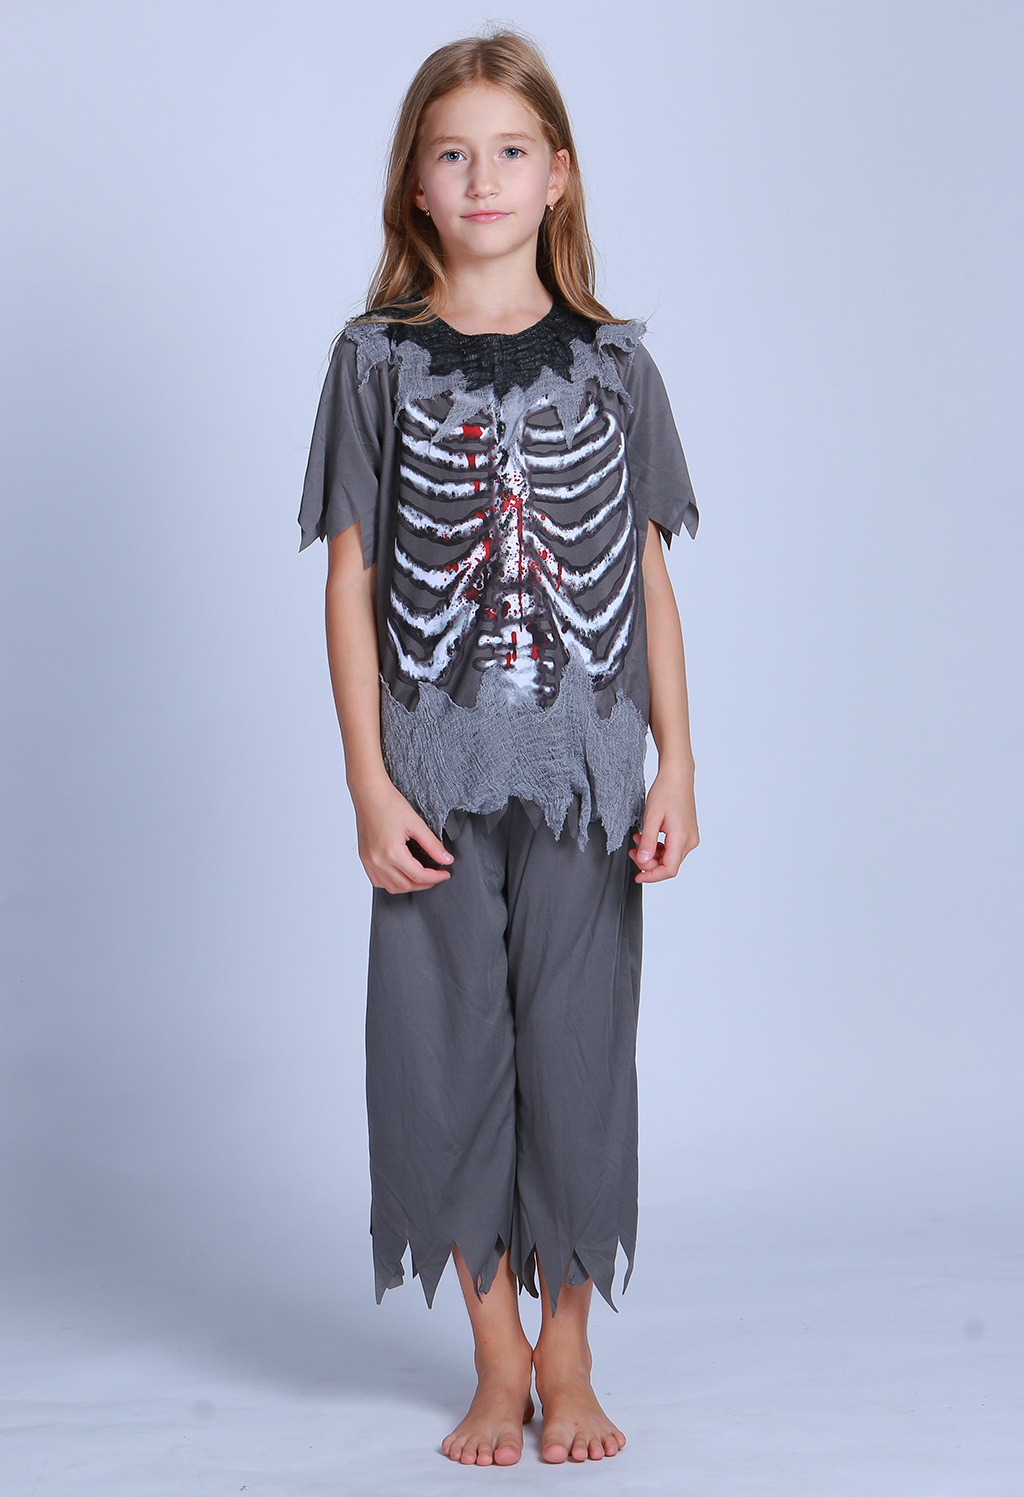 F68144 skeleton costume boys